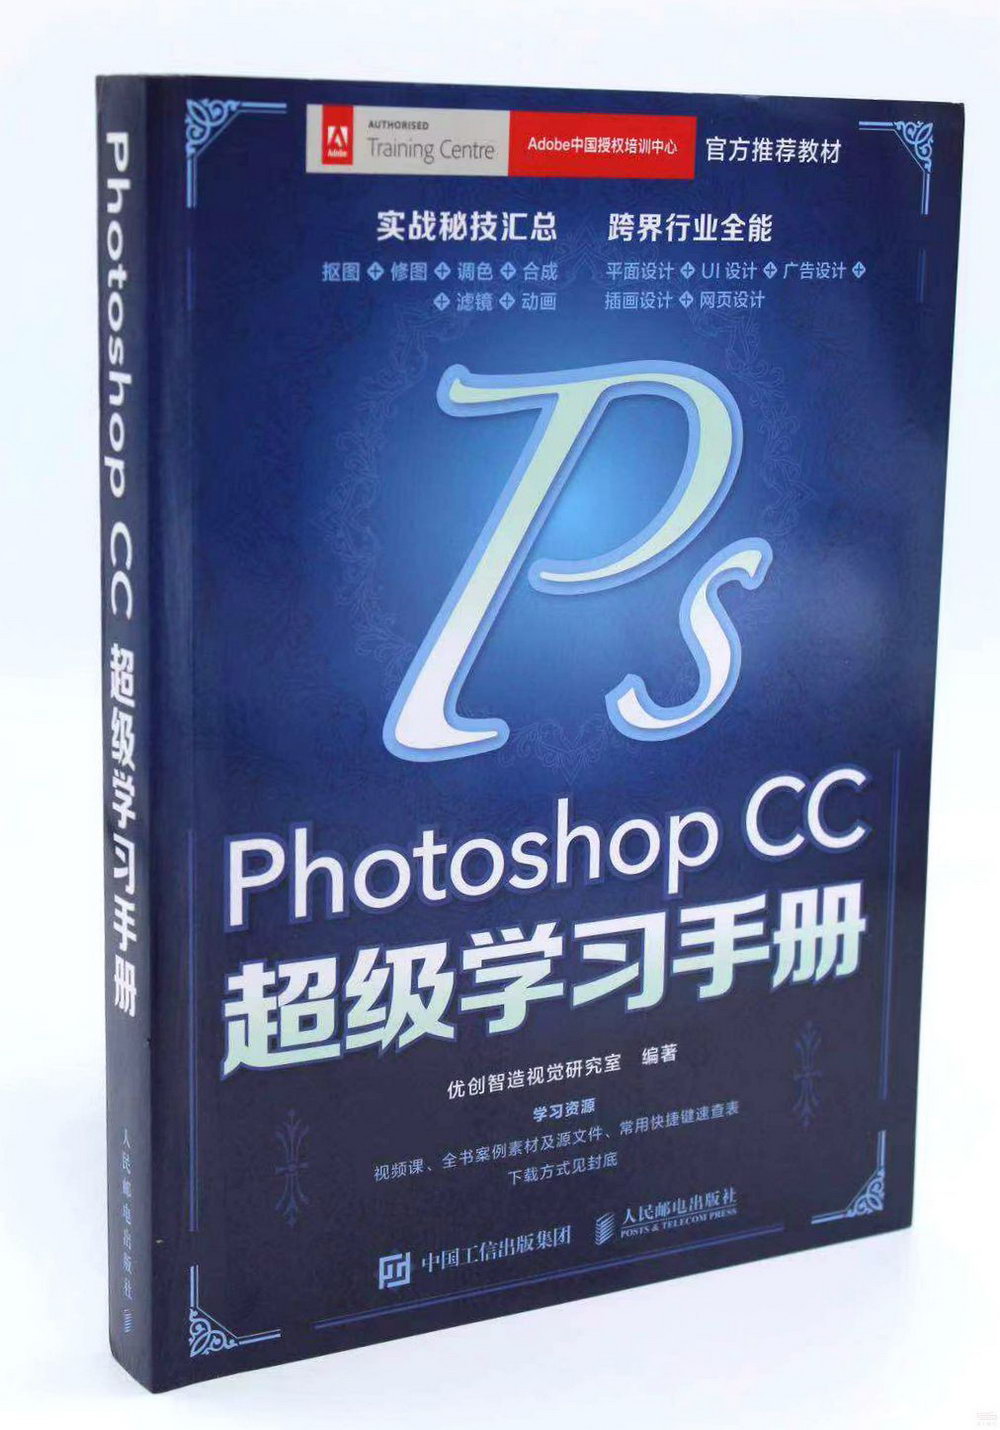 Photoshop CC超級學習手冊